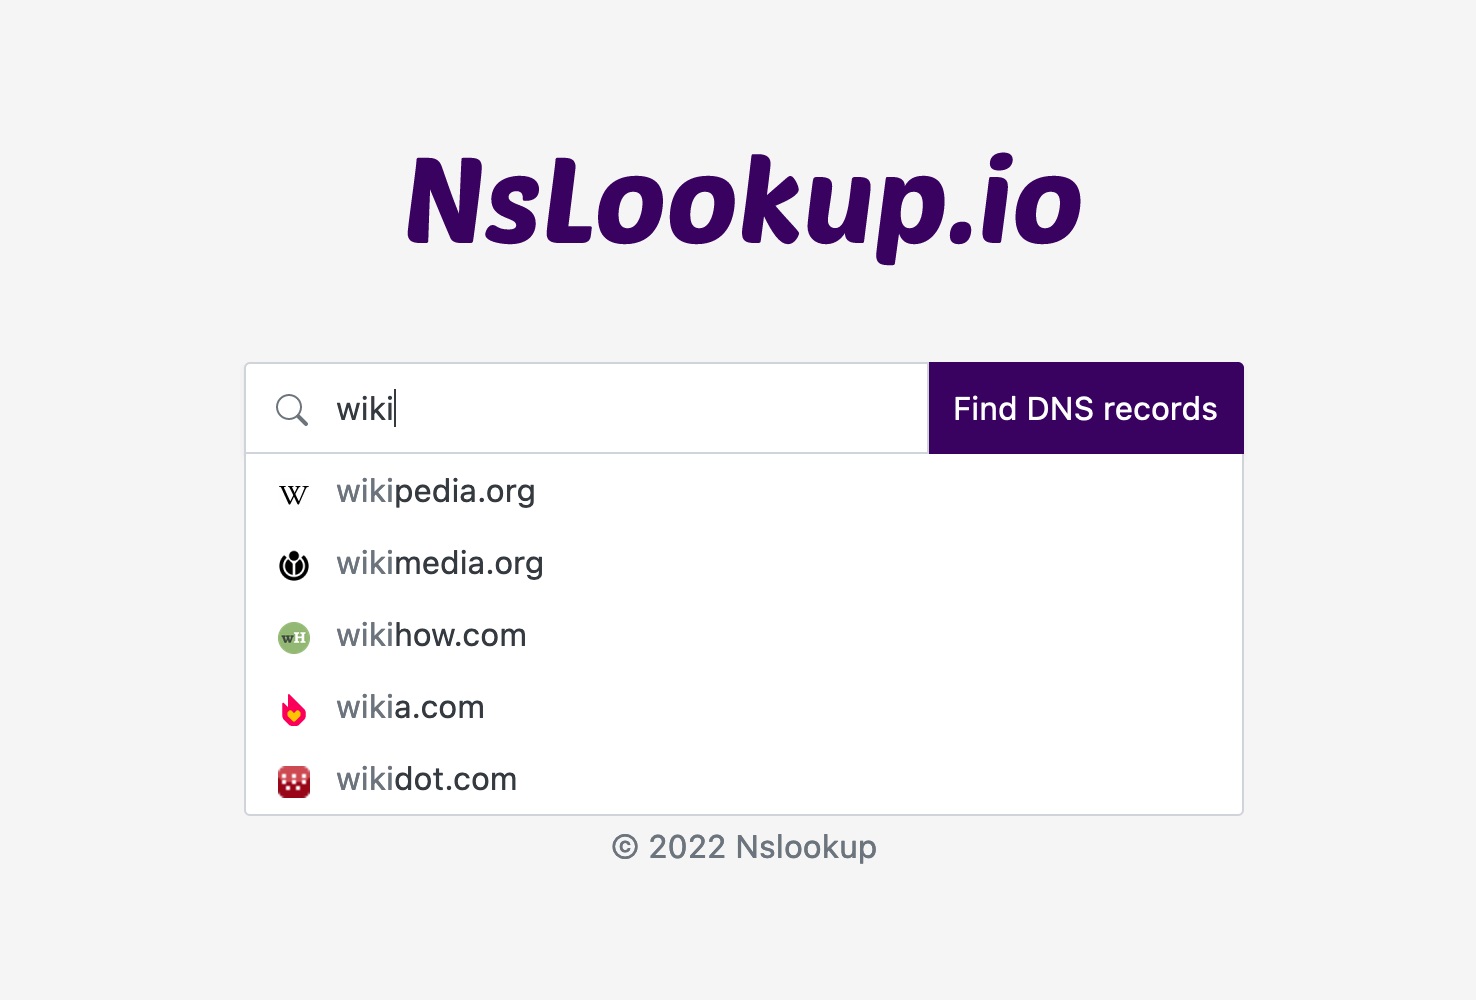 Автозаполнение поиска DNS на NsLookup.io